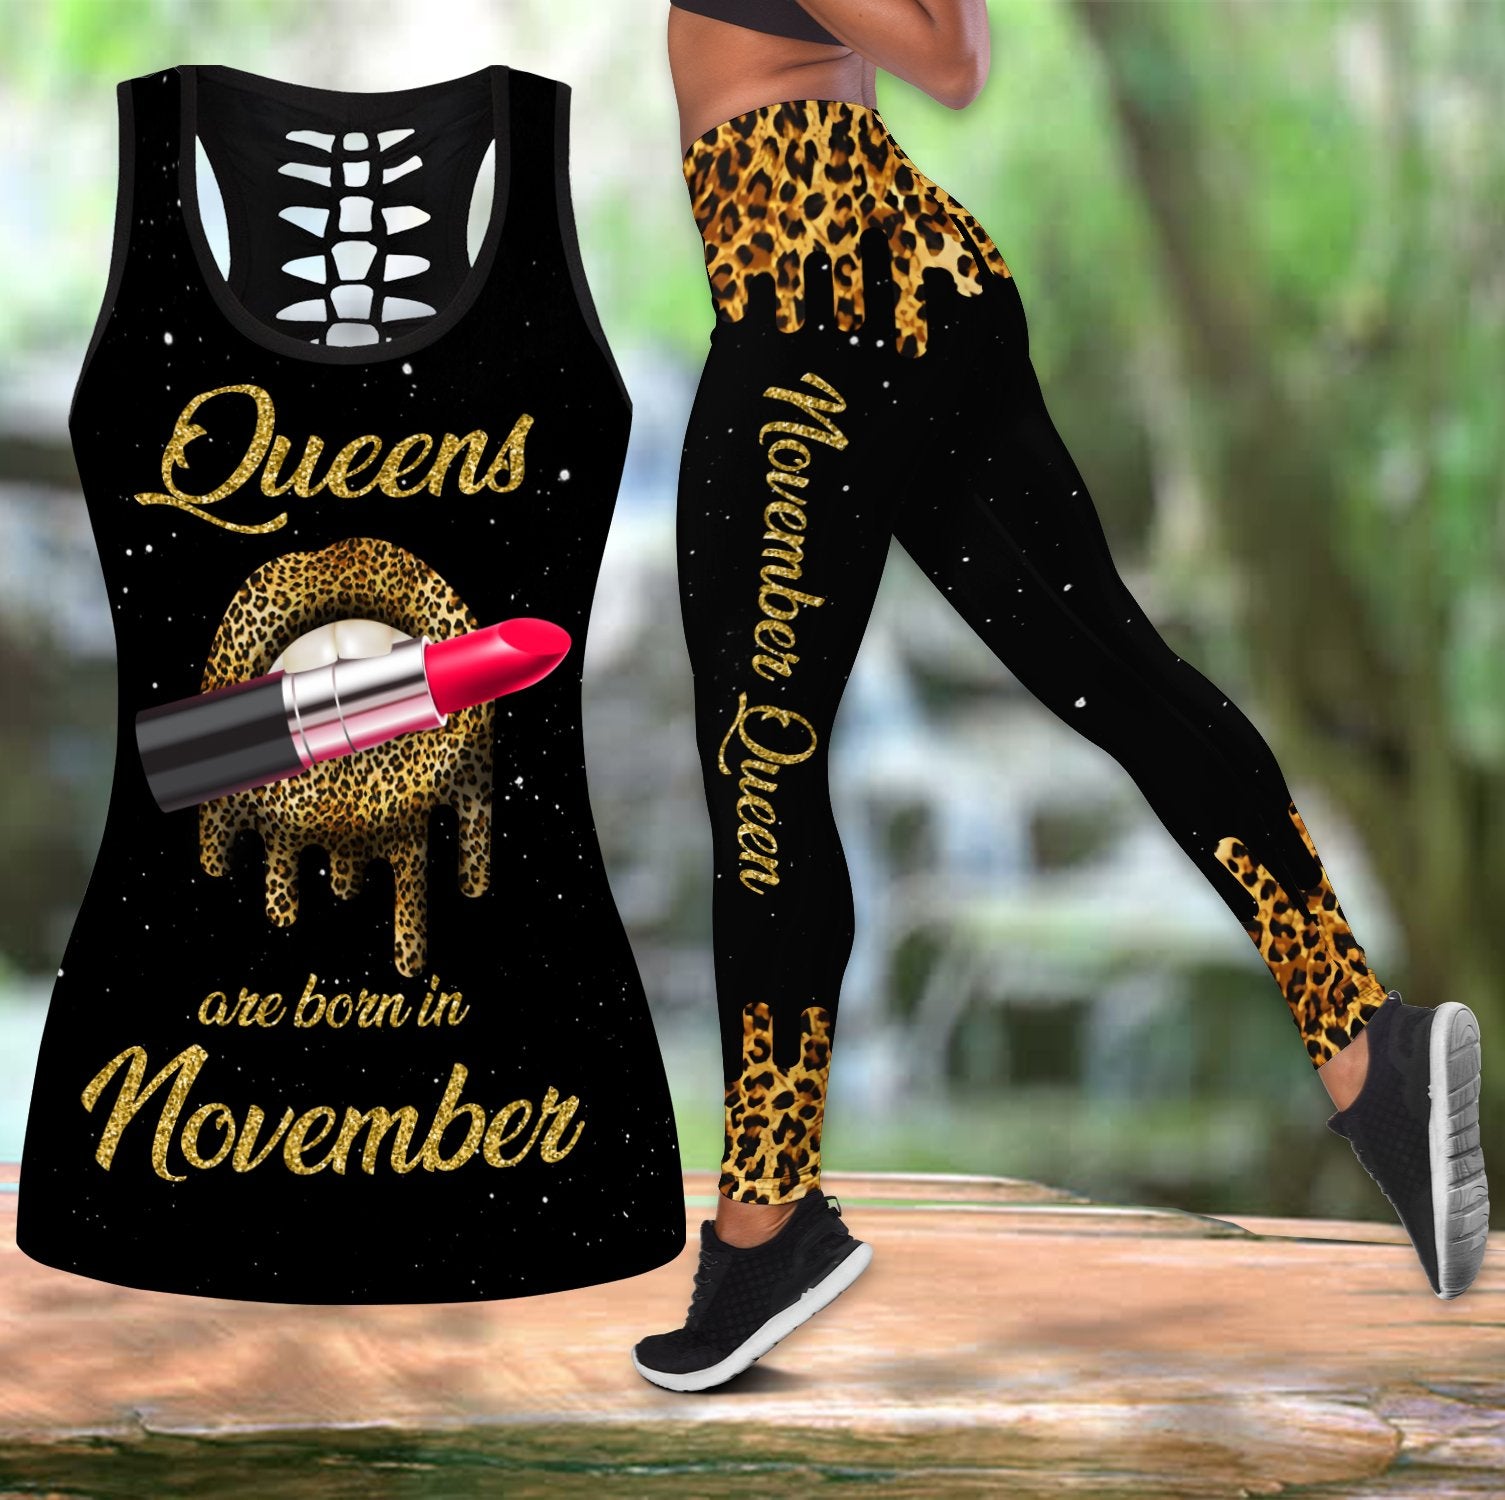 November-Queens Are Born In November Combo Tank Top + Legging DQB08082013S